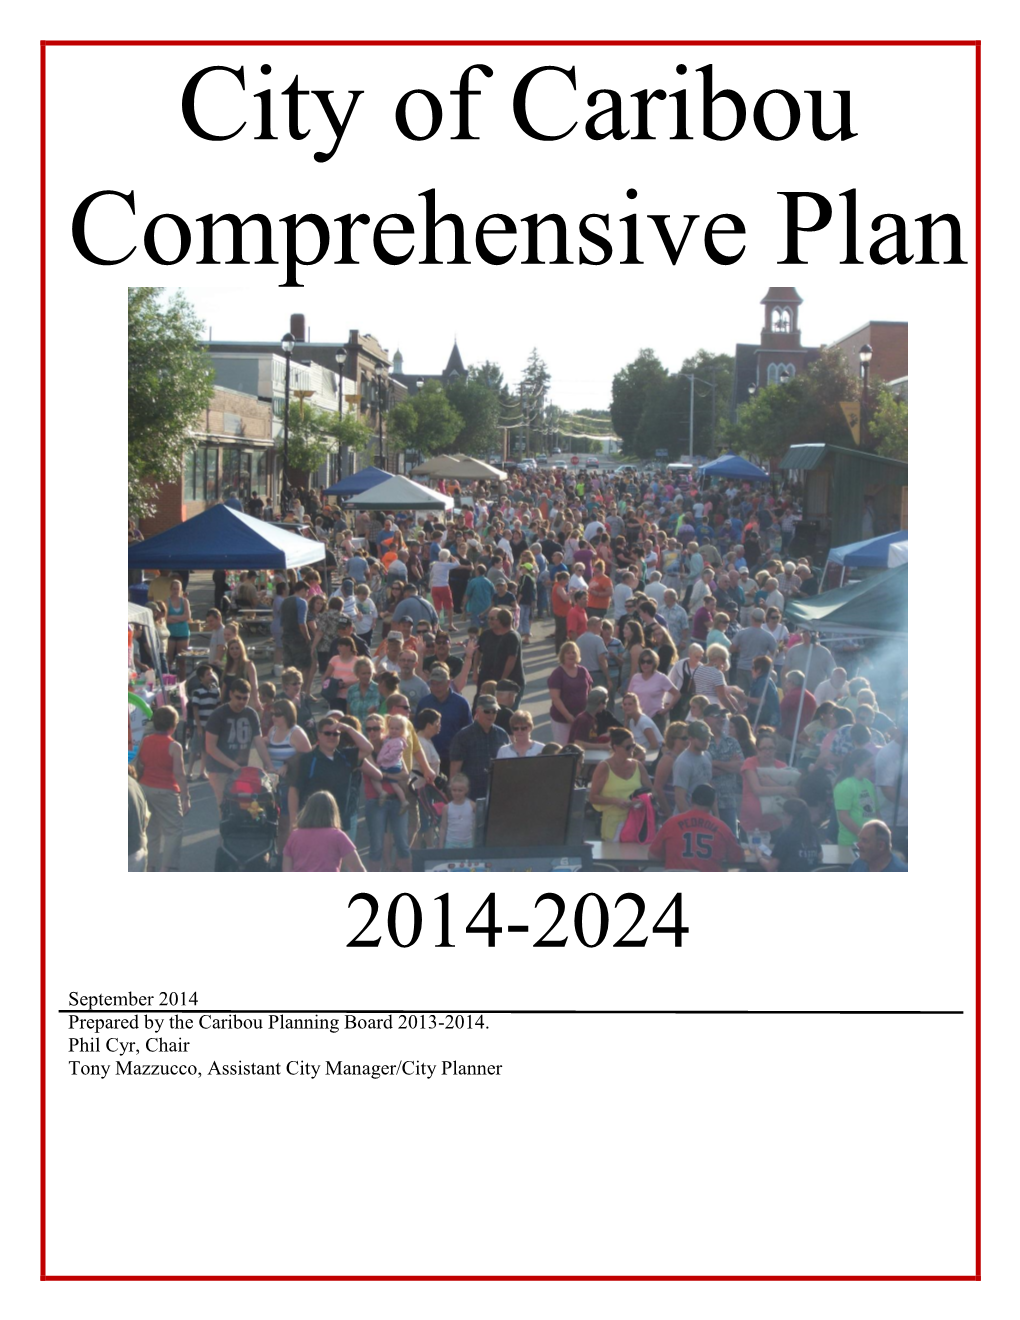 City of Caribou Comprehensive Plan